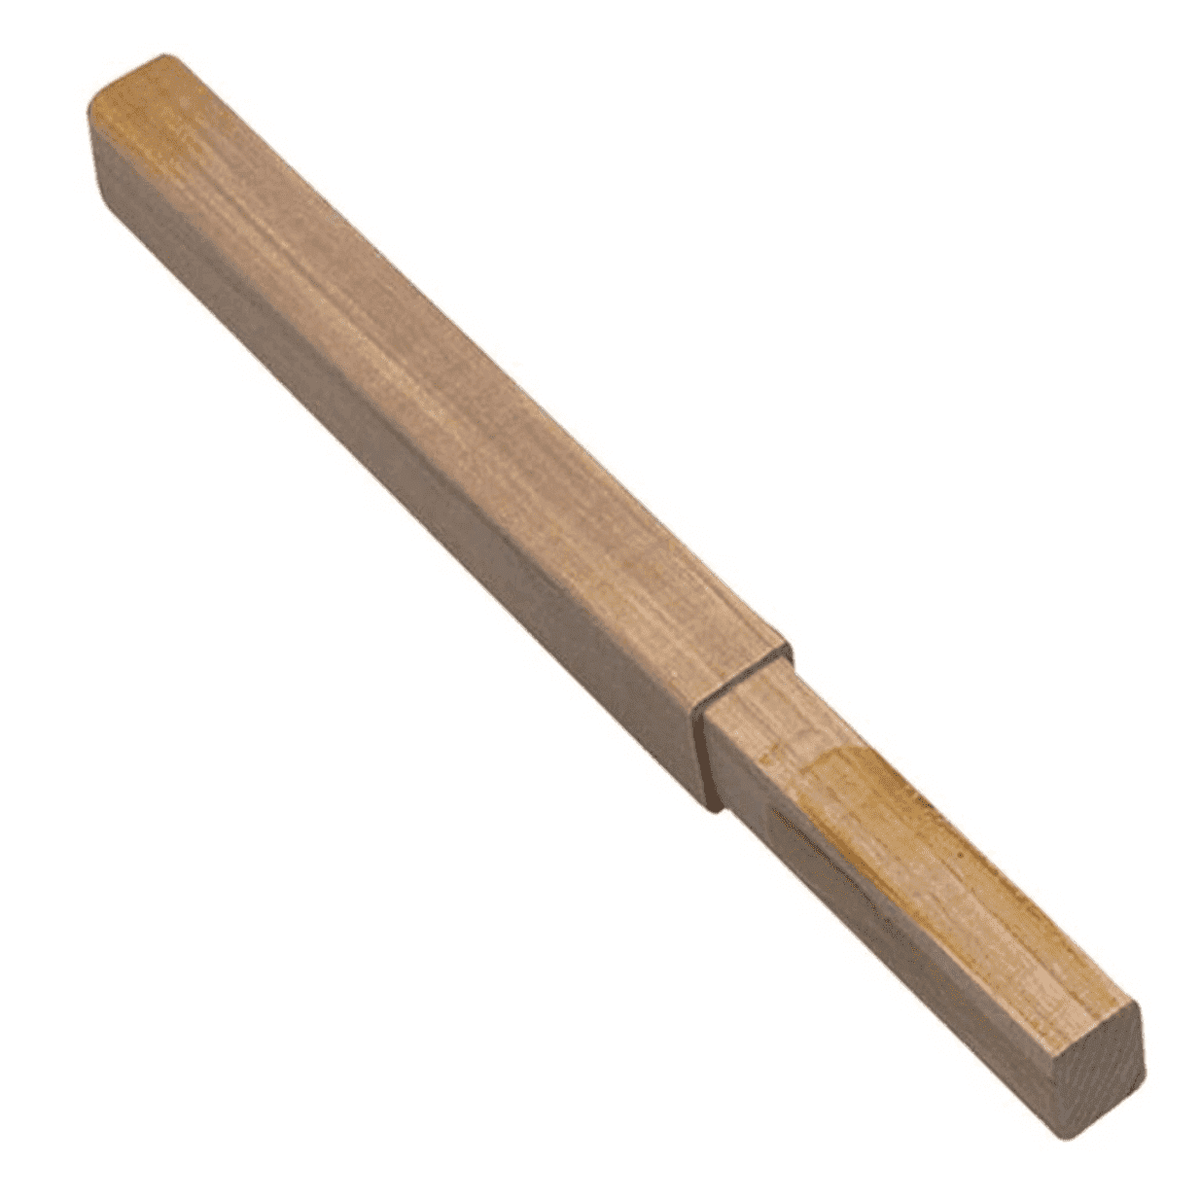 Wooden Stick Extension